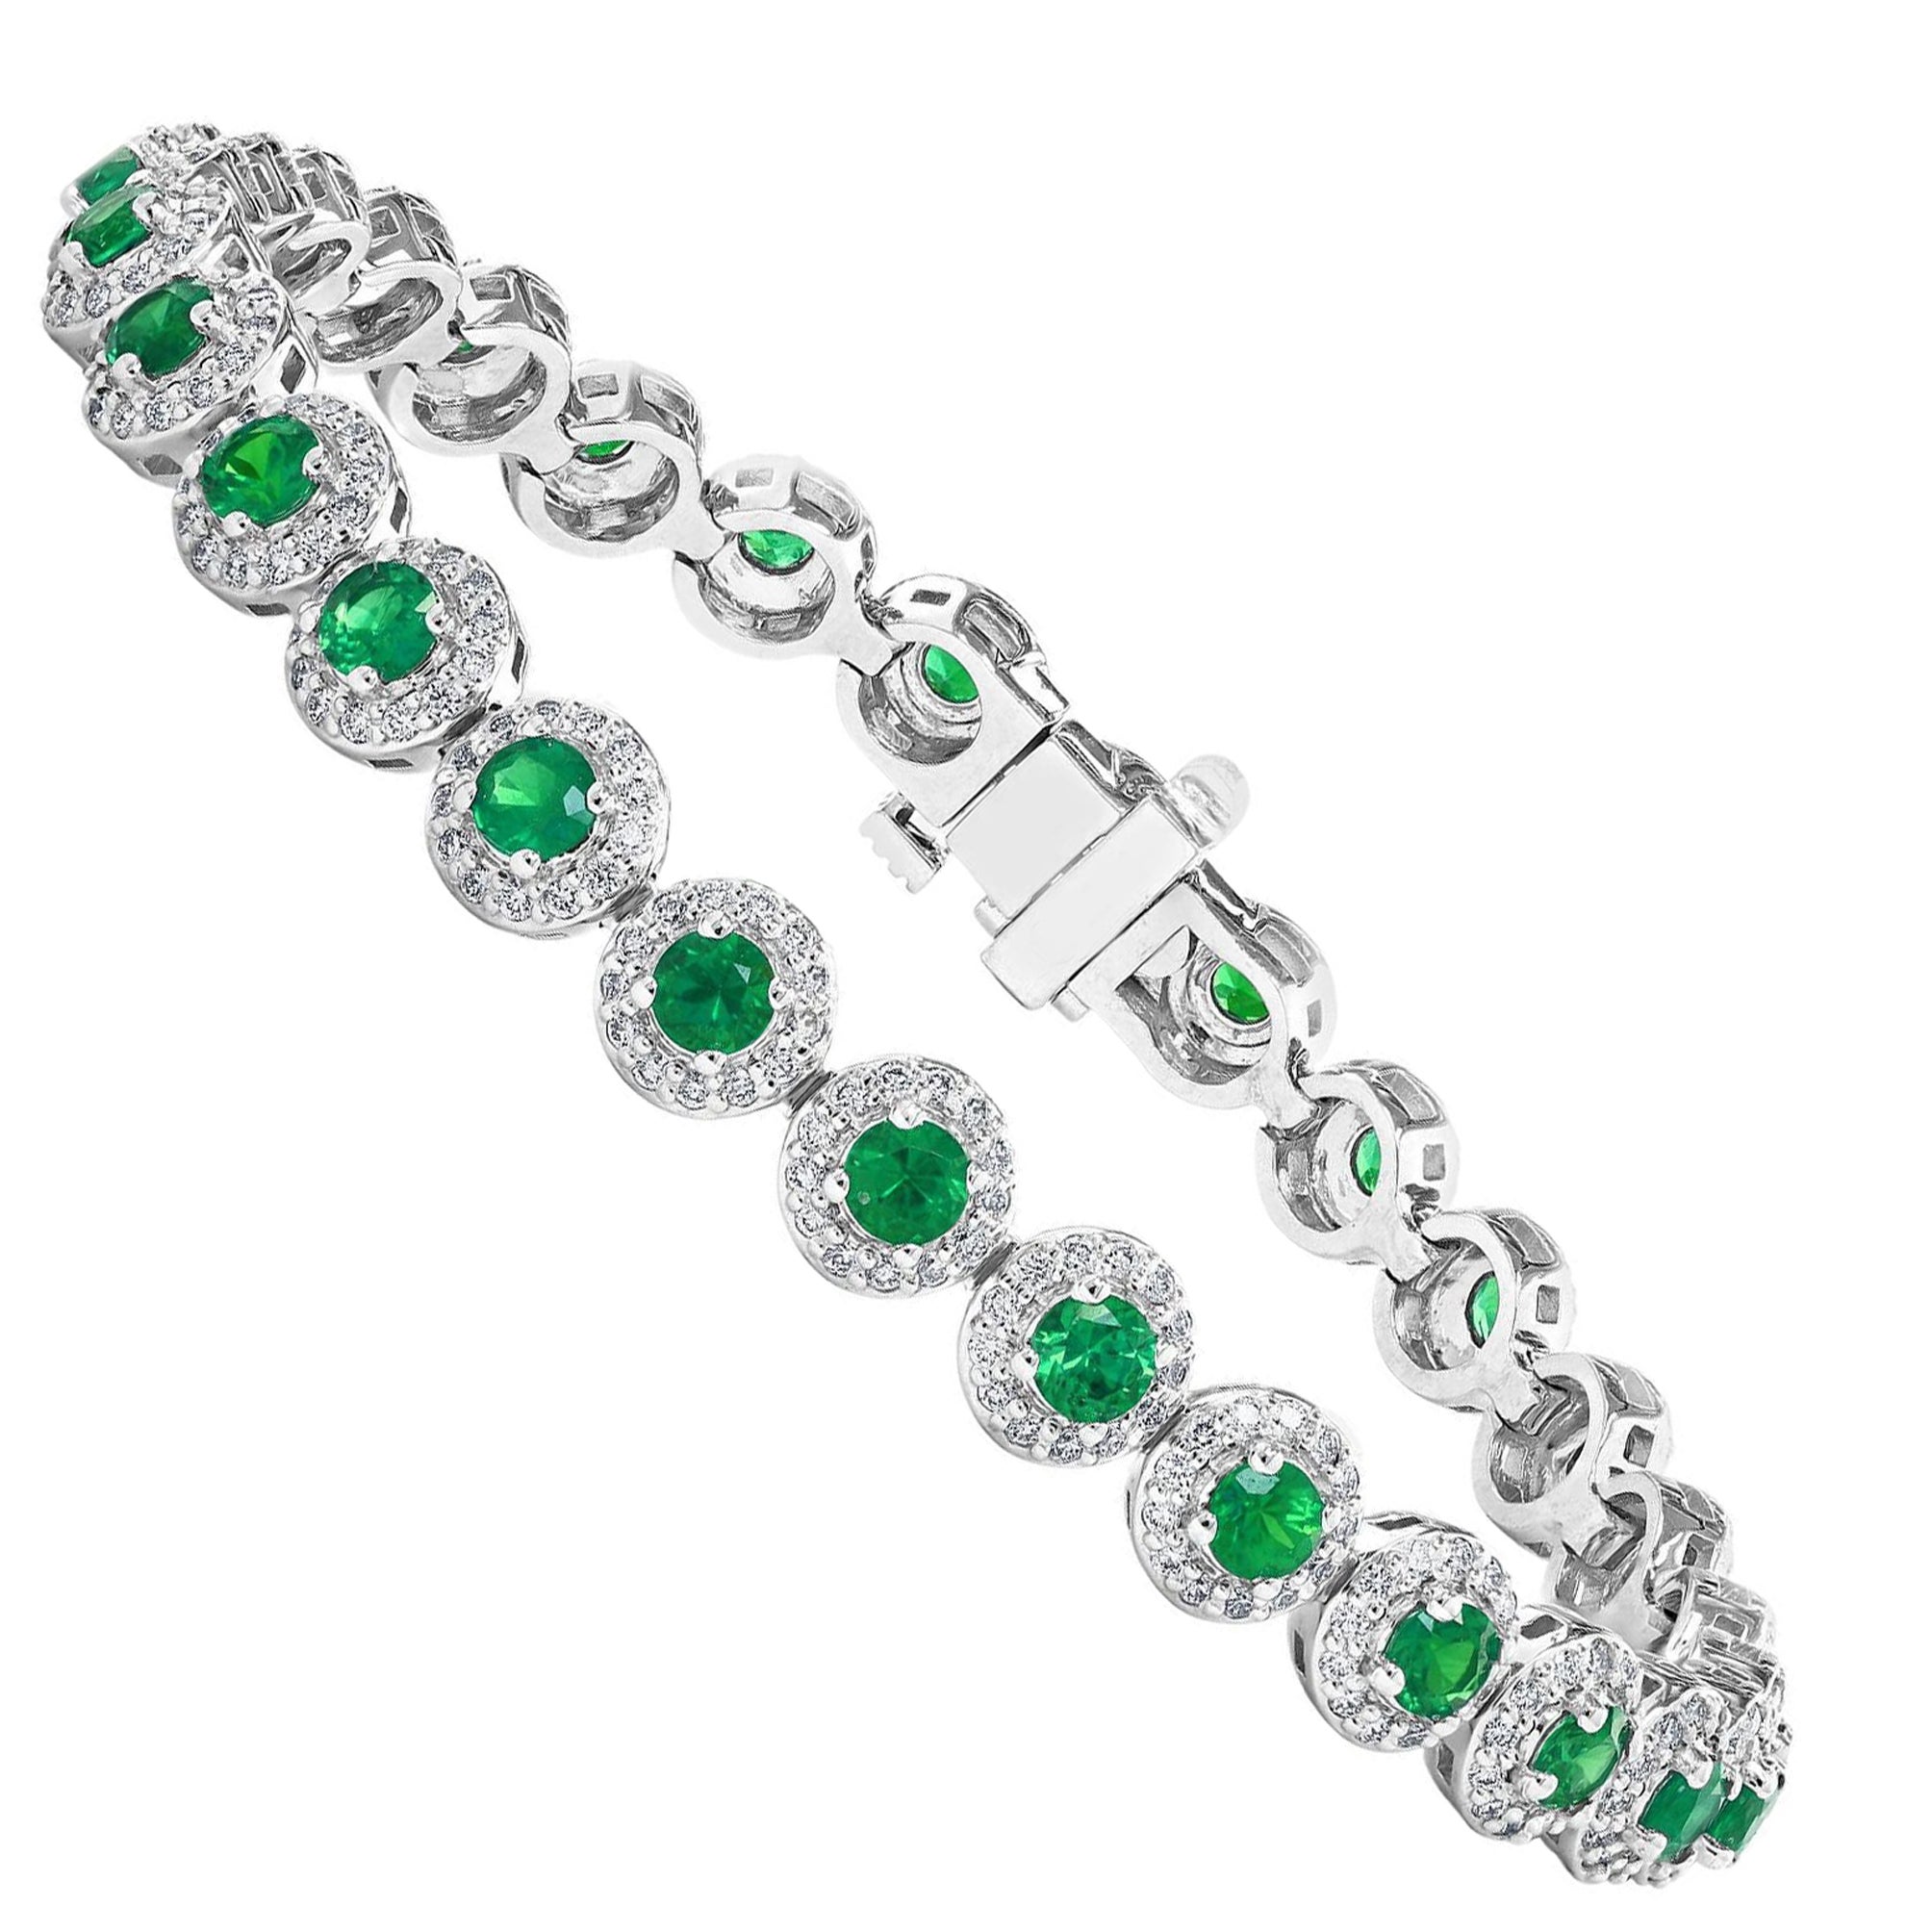 3.05 Carat Round Cut Emerald and Diamond Tennis Bracelet in 14K White Gold